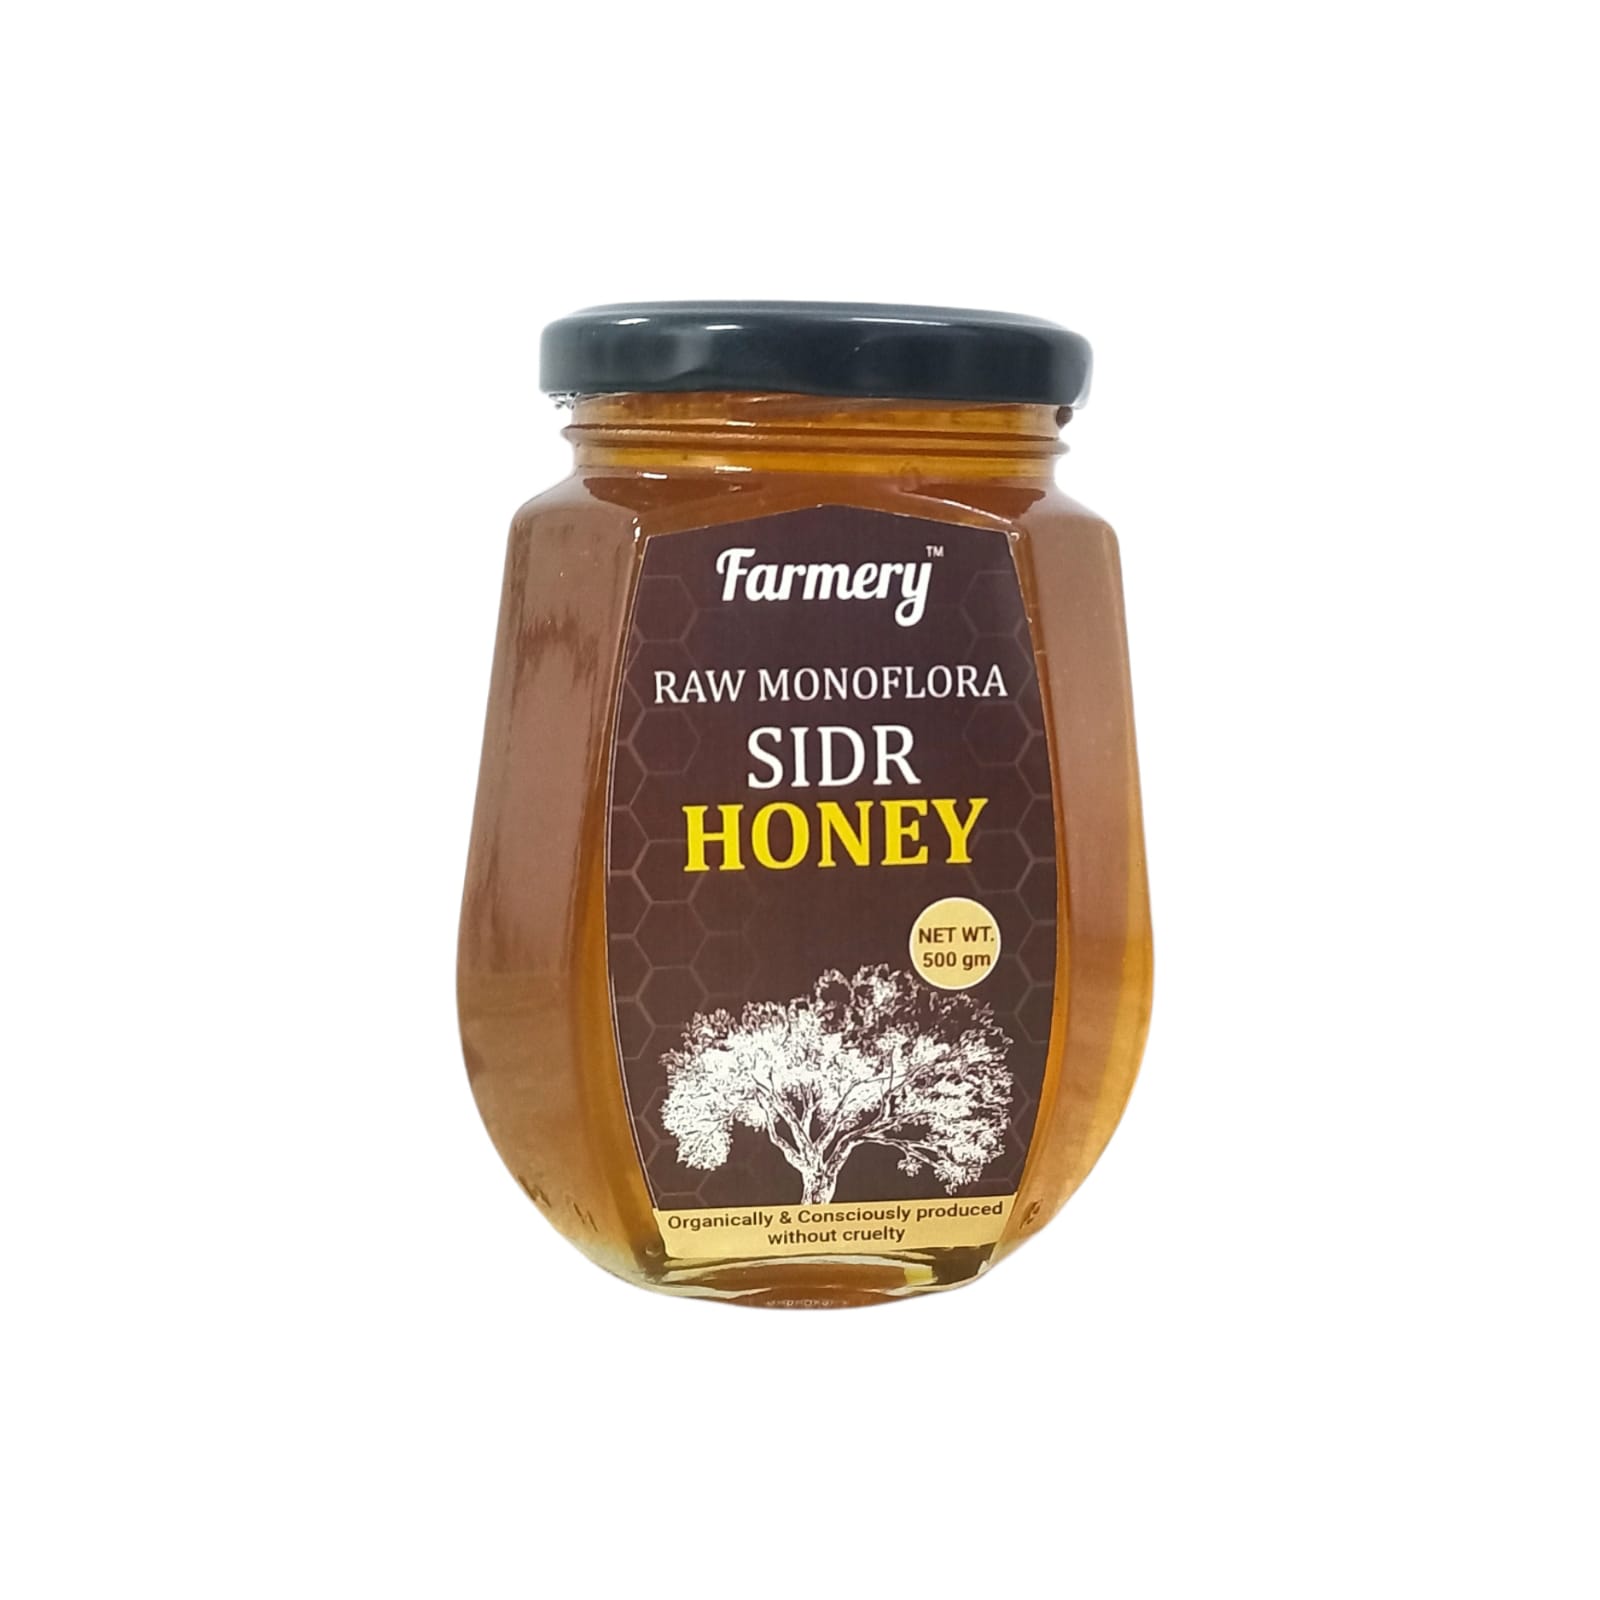 Raw Monoflora Sidr Honey 